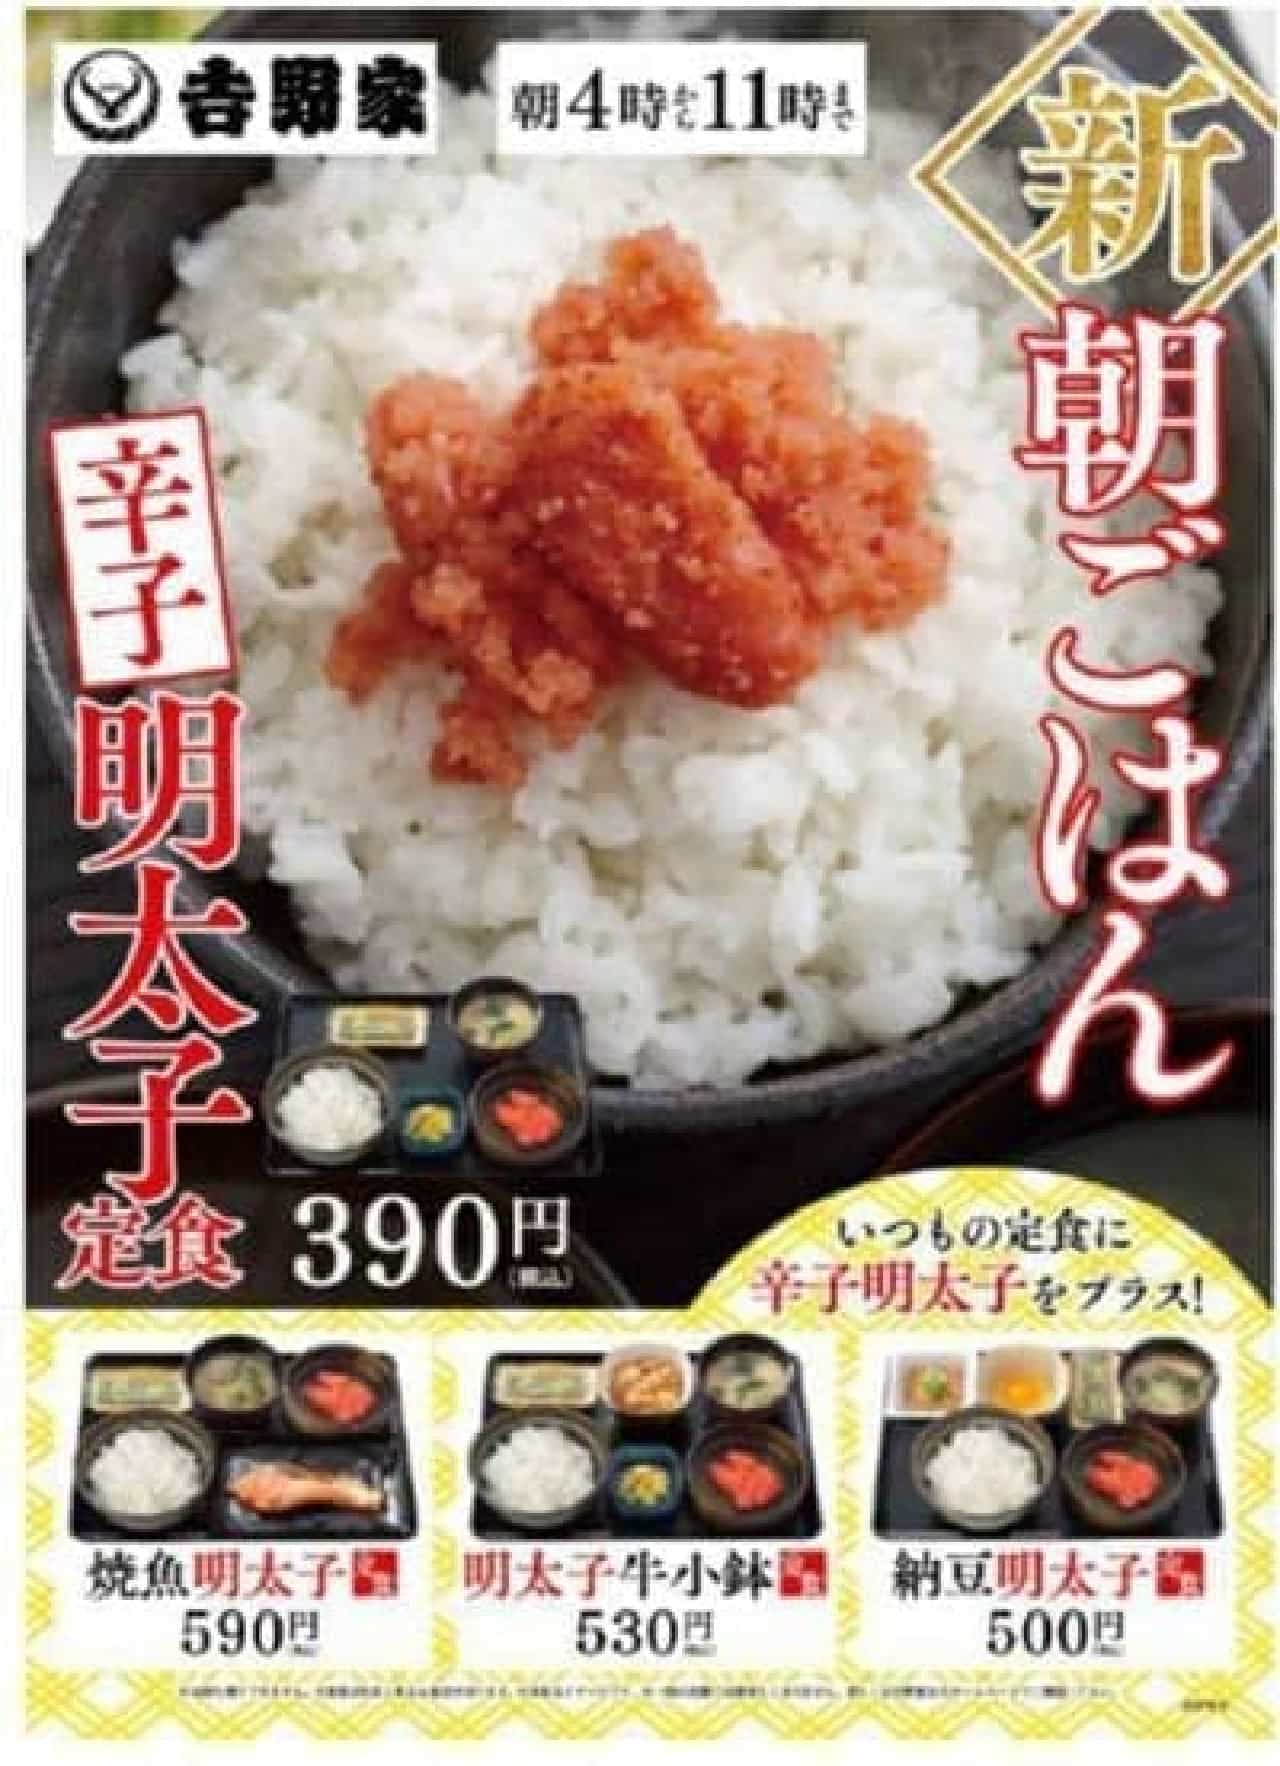 Yoshinoya "Spicy Mentaiko Set Meal"